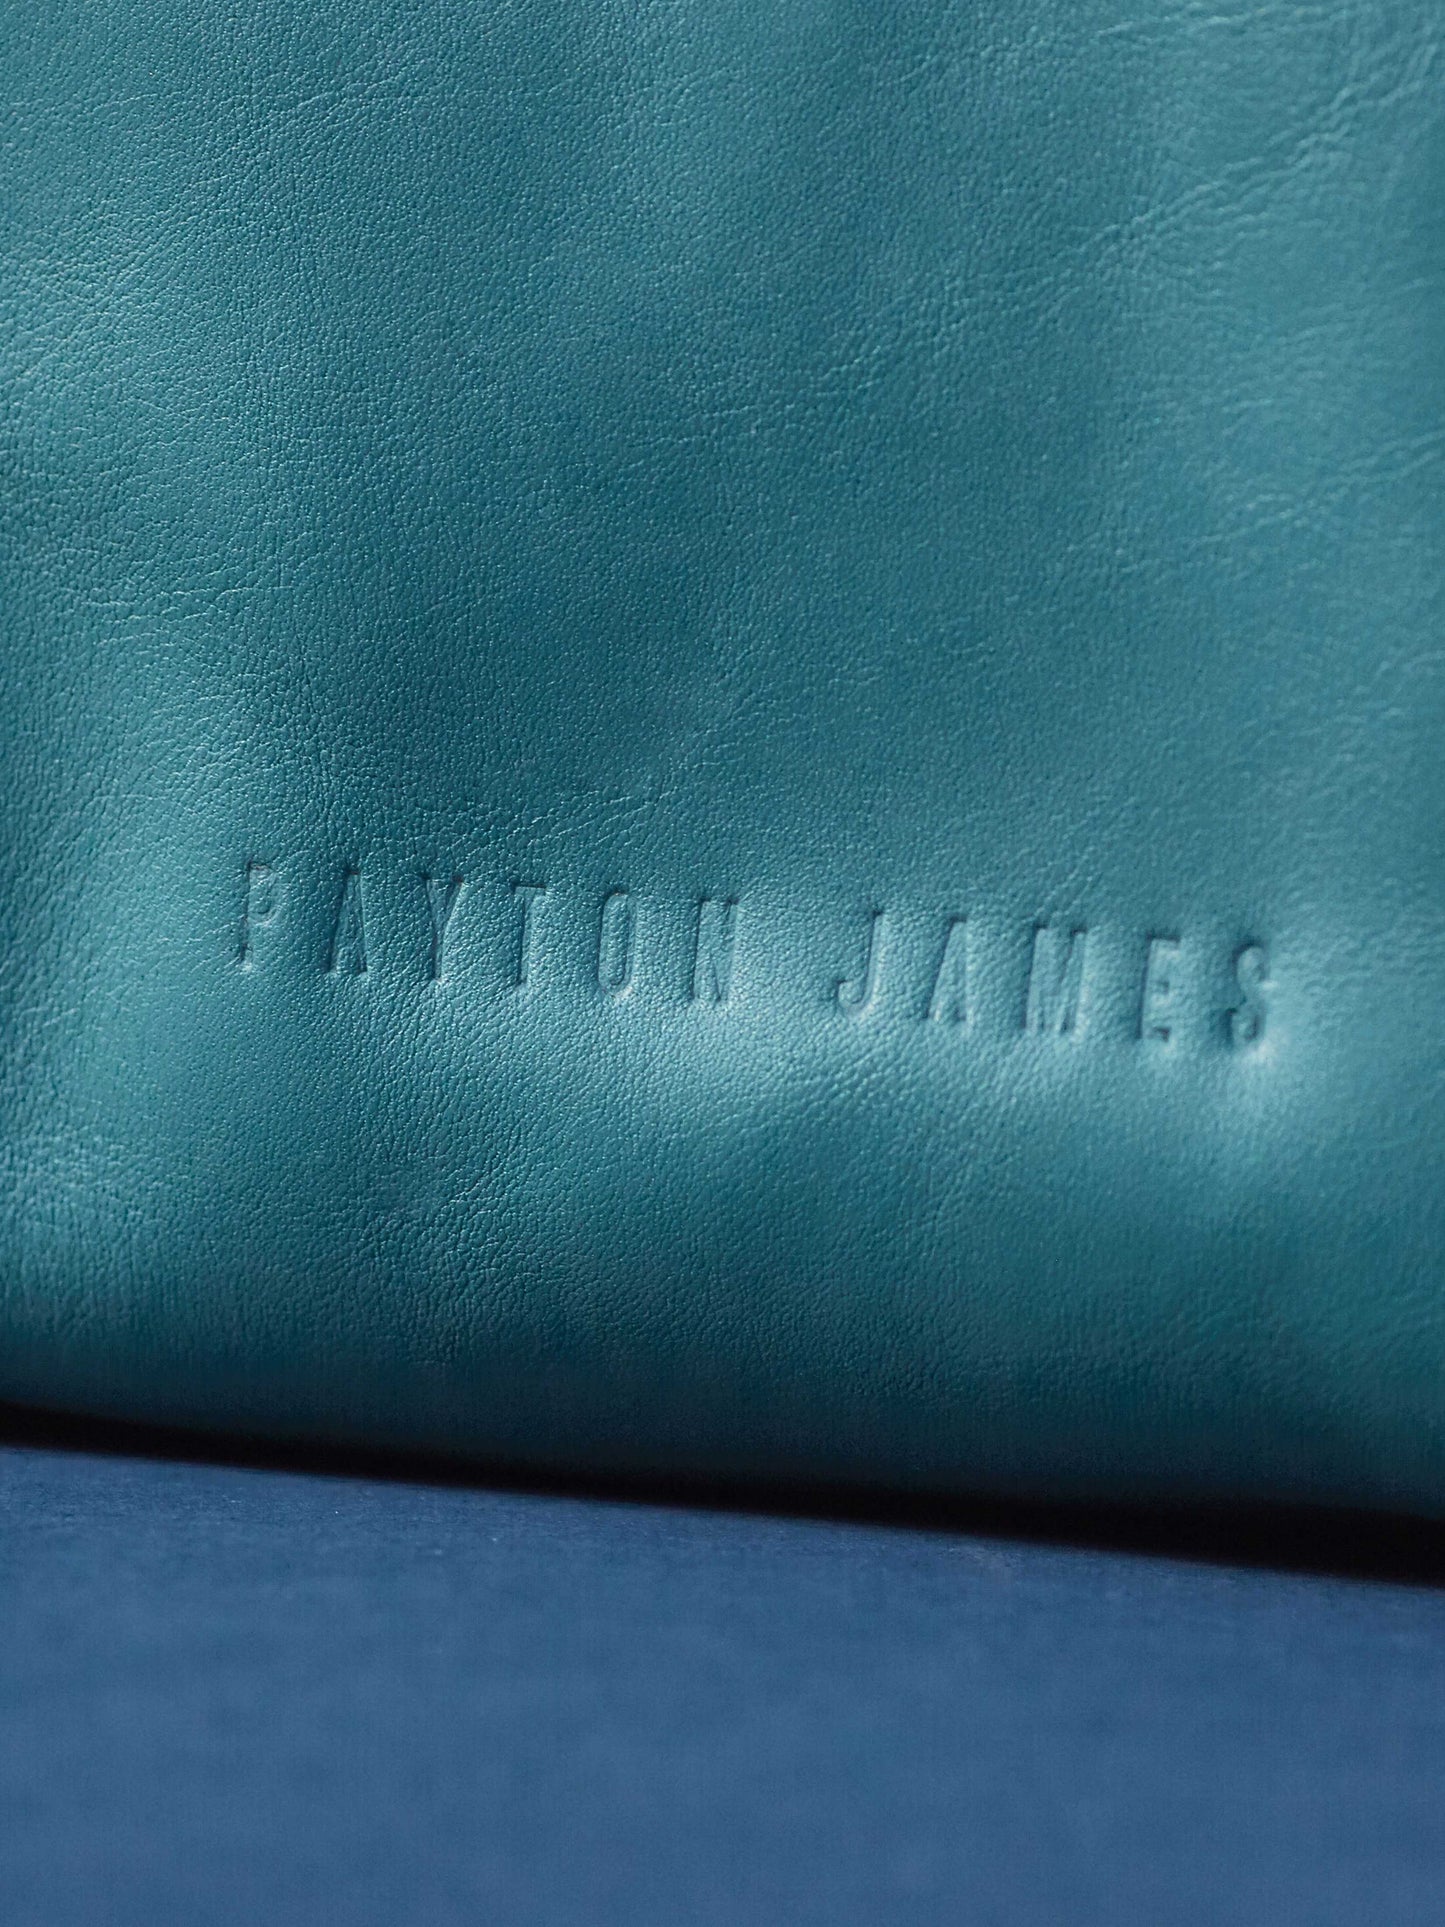 Leather-Crossbody Handbag- emerald Color-by-PaytonJames-Nashville-designer. closeup of name